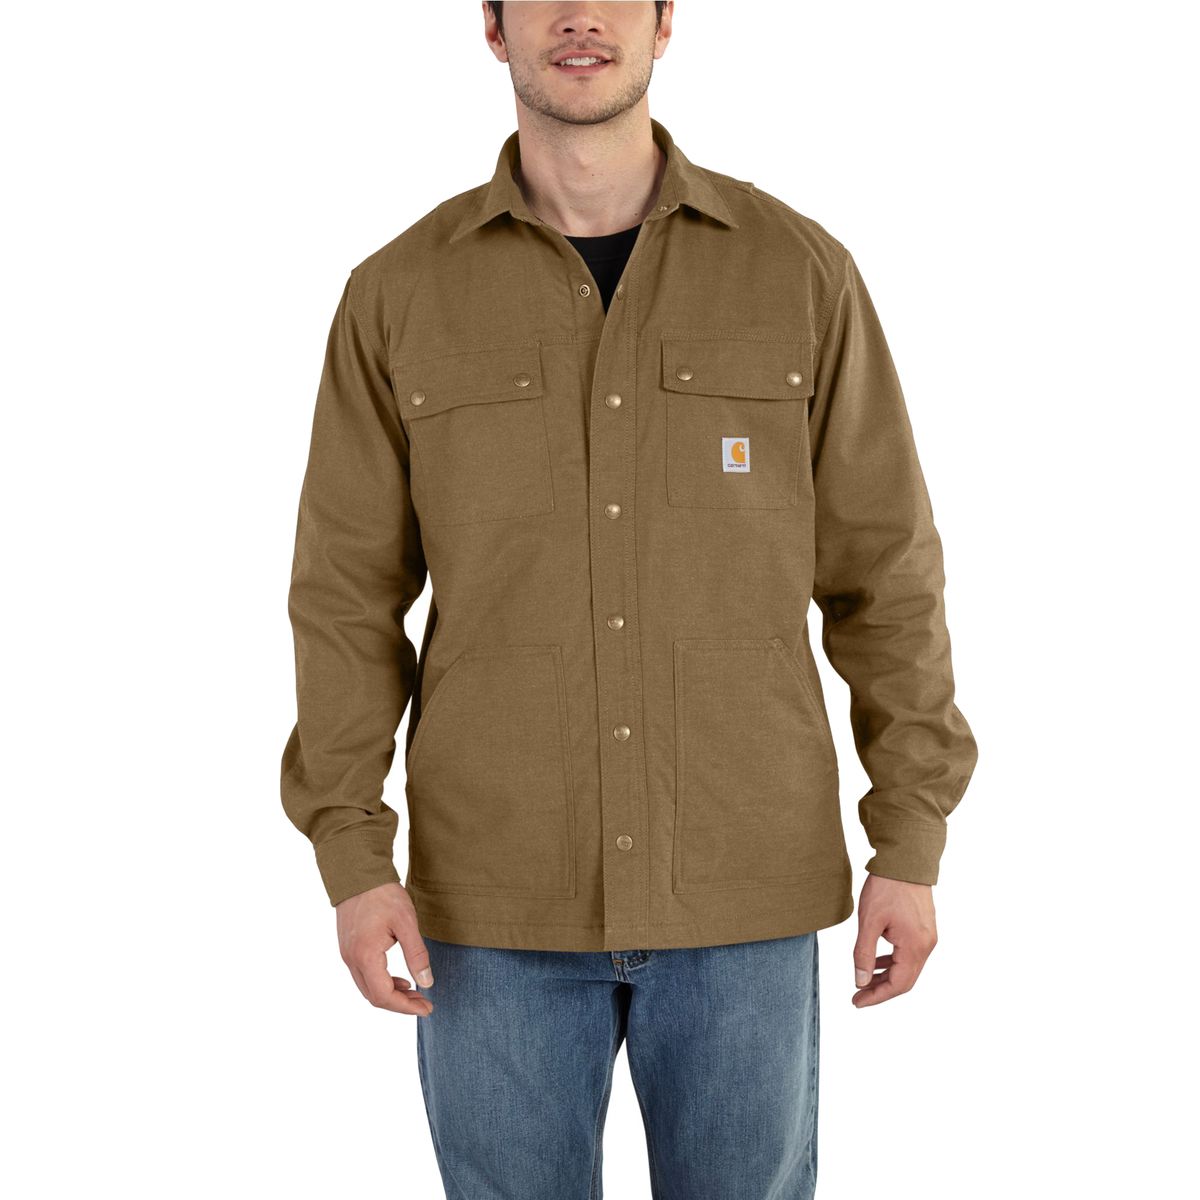 Carhartt Full Swing Cryder Shirt Jacket - Men's - Clothing